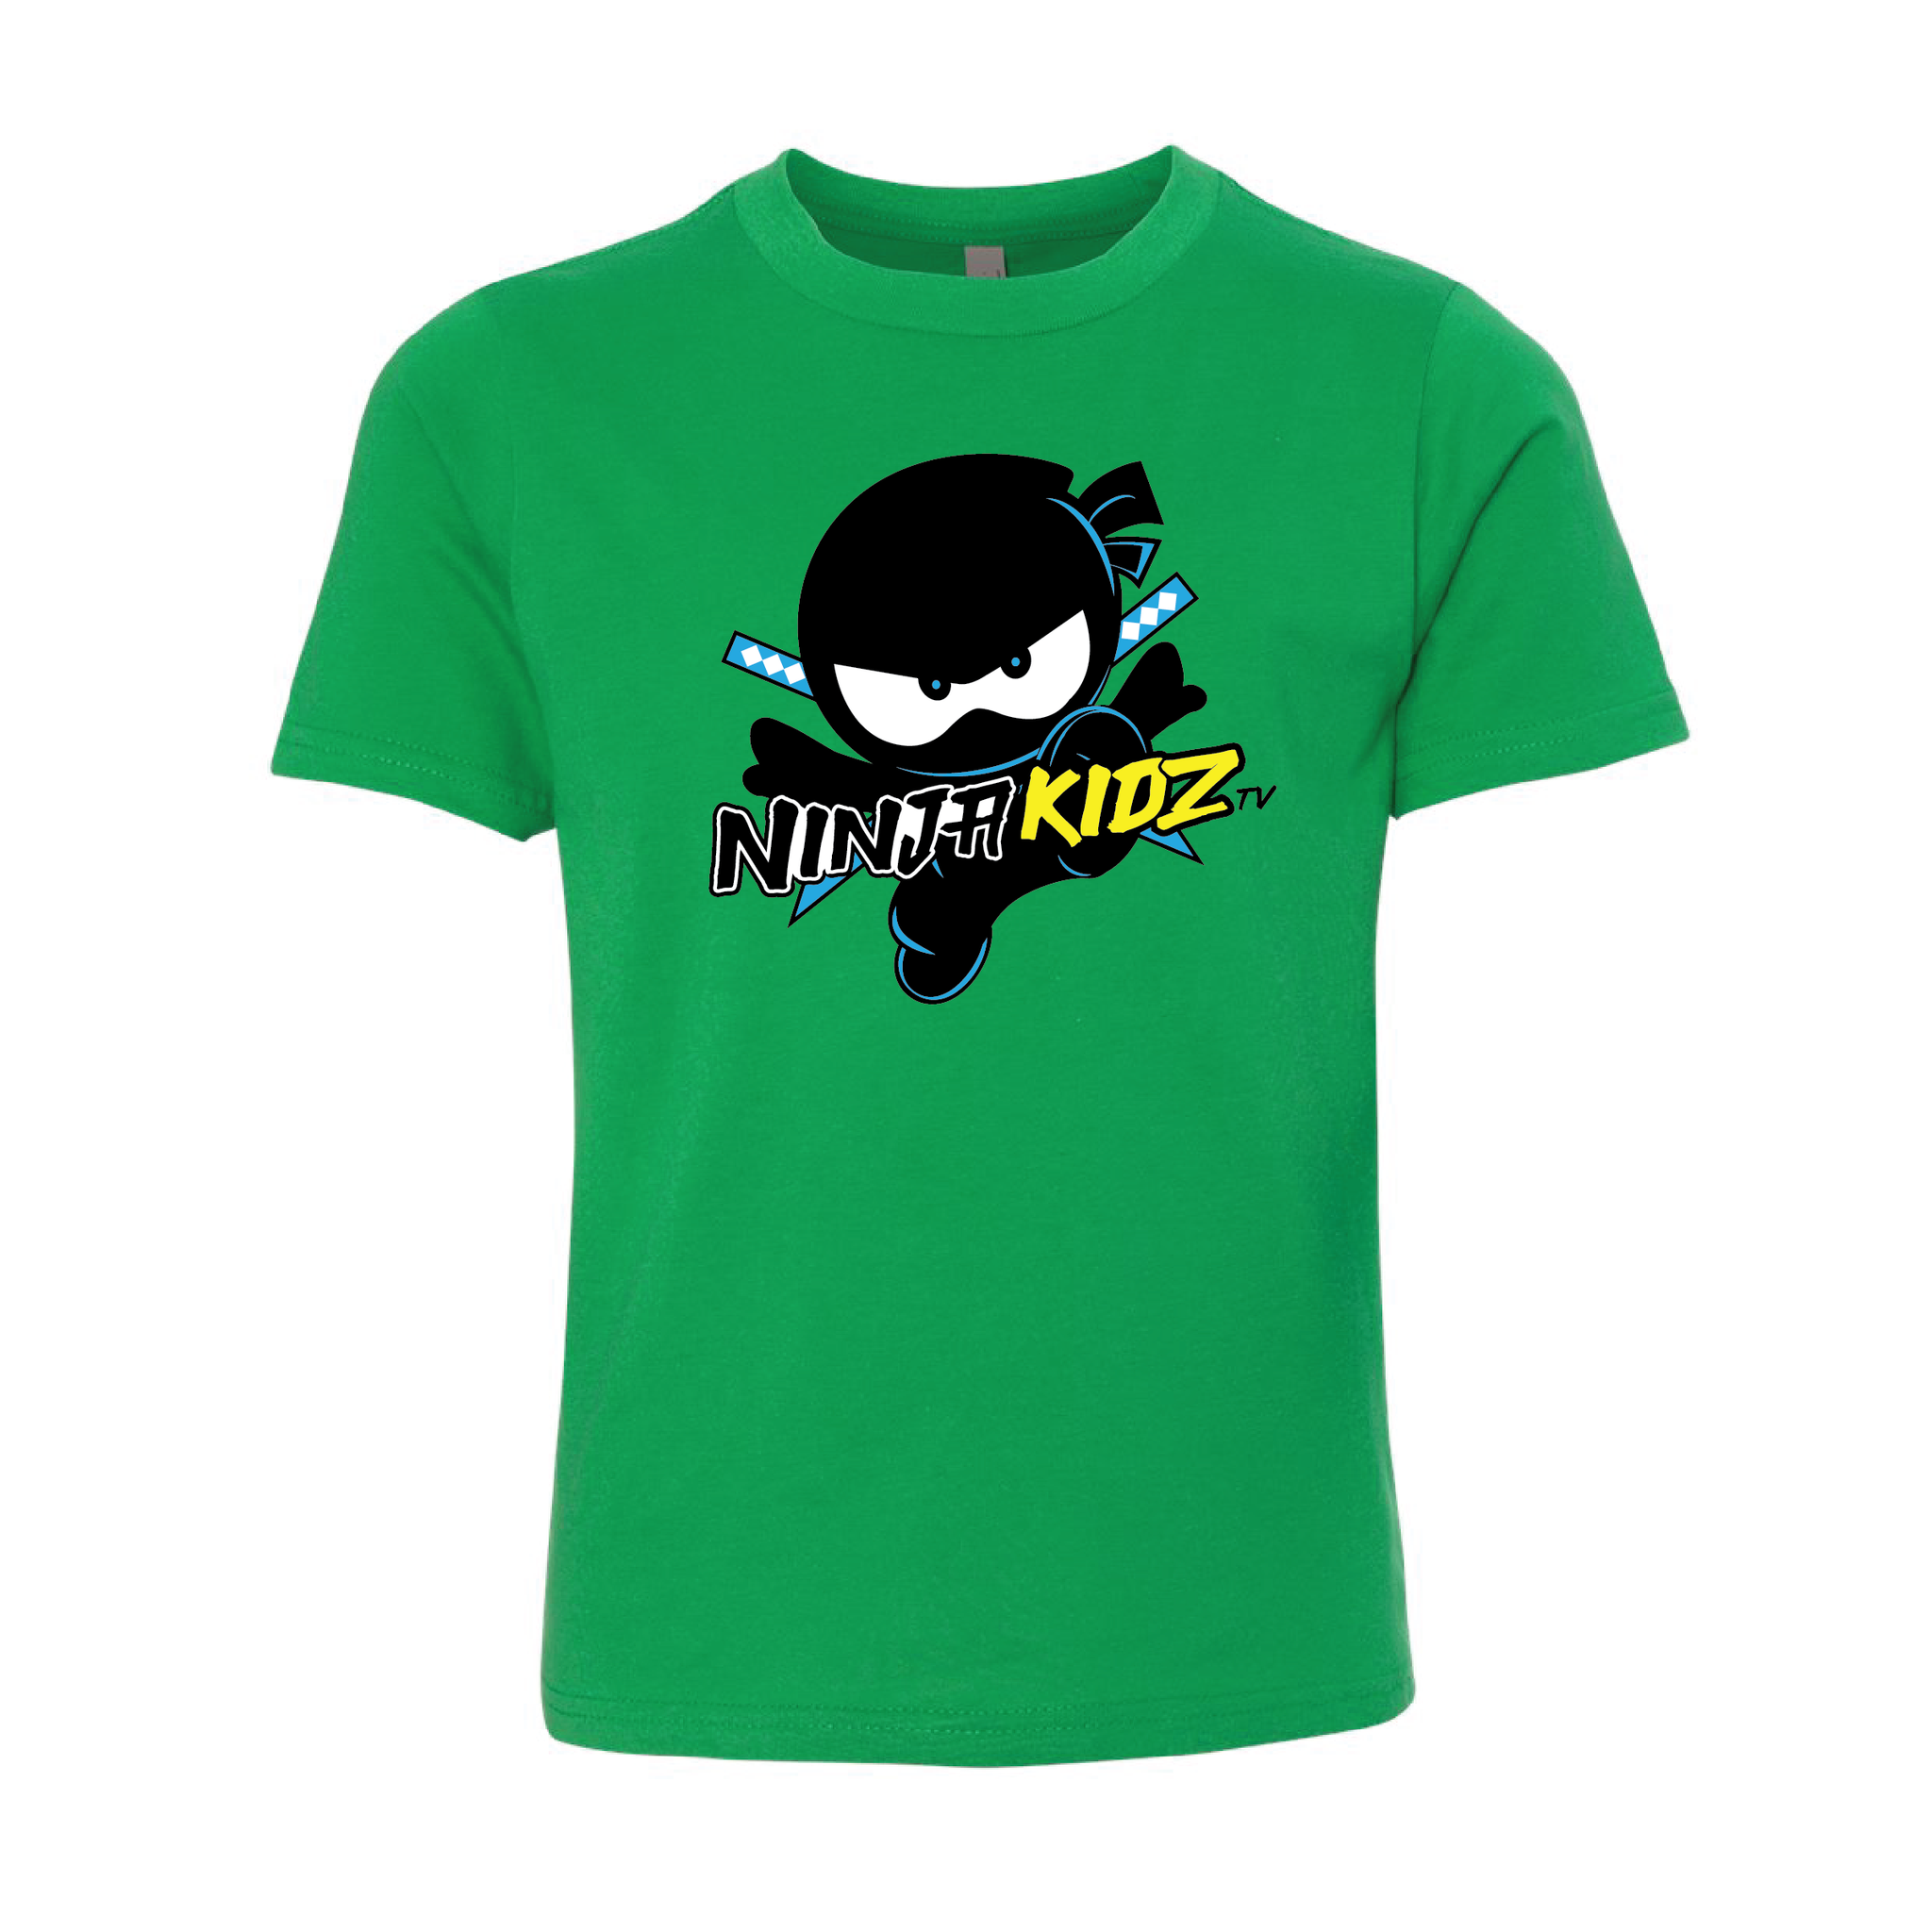 3 2 1NINJA! T-Shirt | Ninja Kidz TV